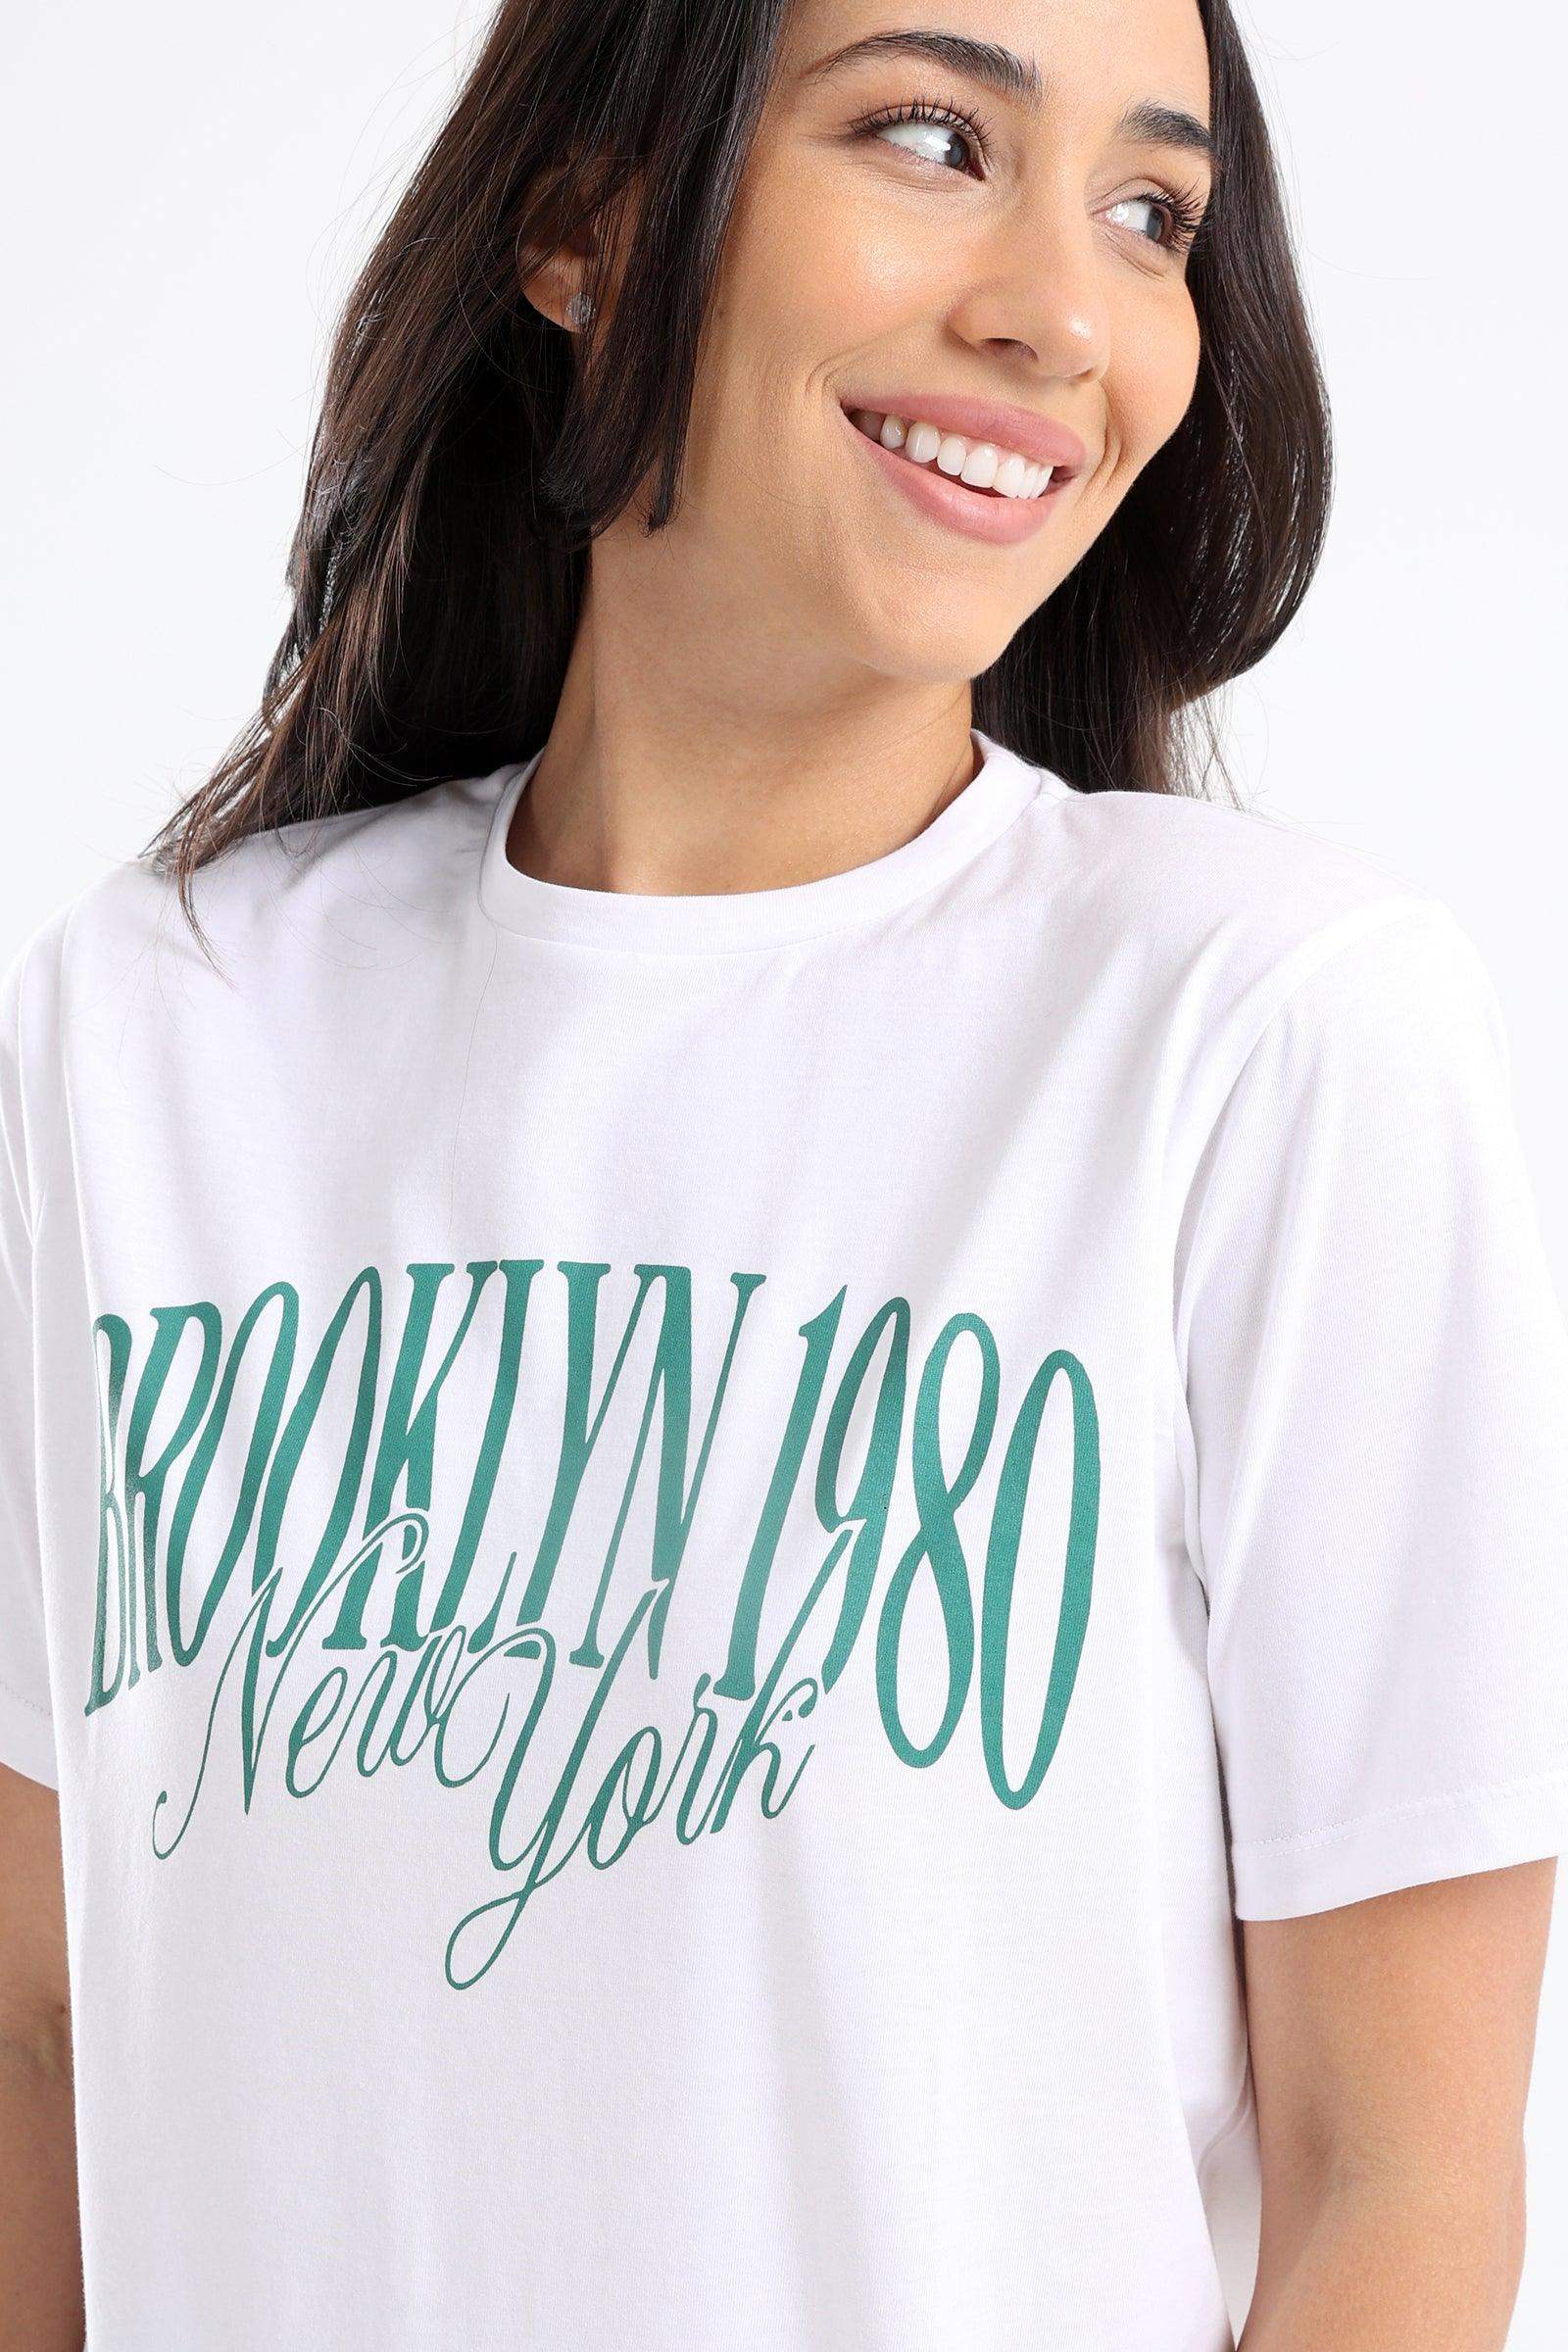 "Brooklyn 1980" Printed T-Shirt - Carina - كارينا